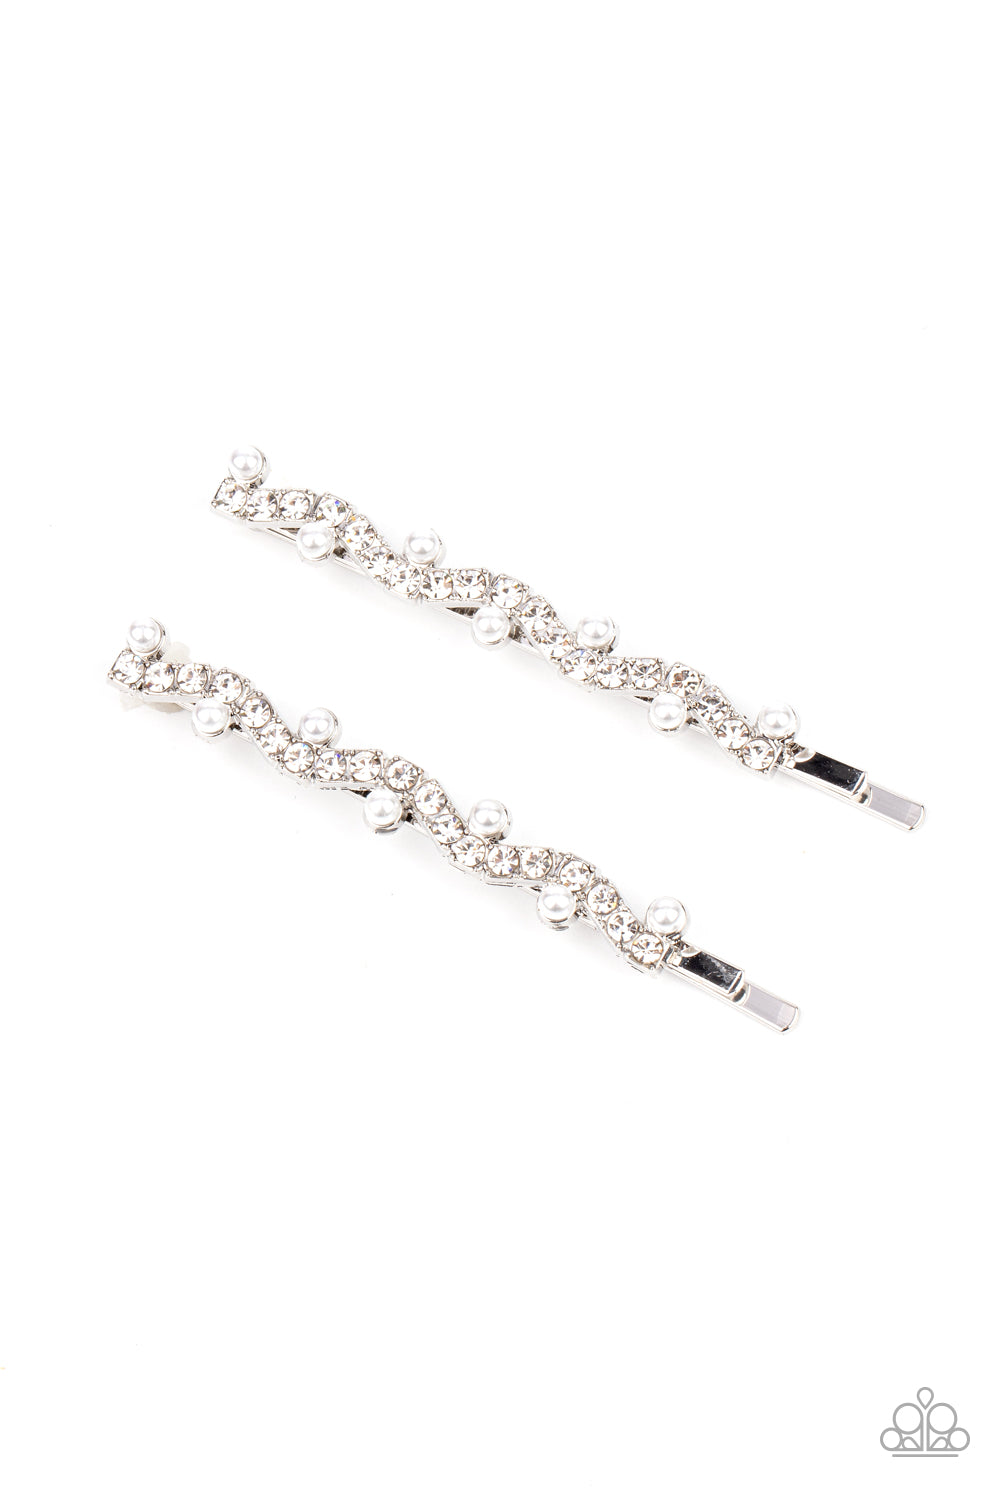 Ballroom Banquet - White and Silver Hair Pins- Paparazzi Accessories